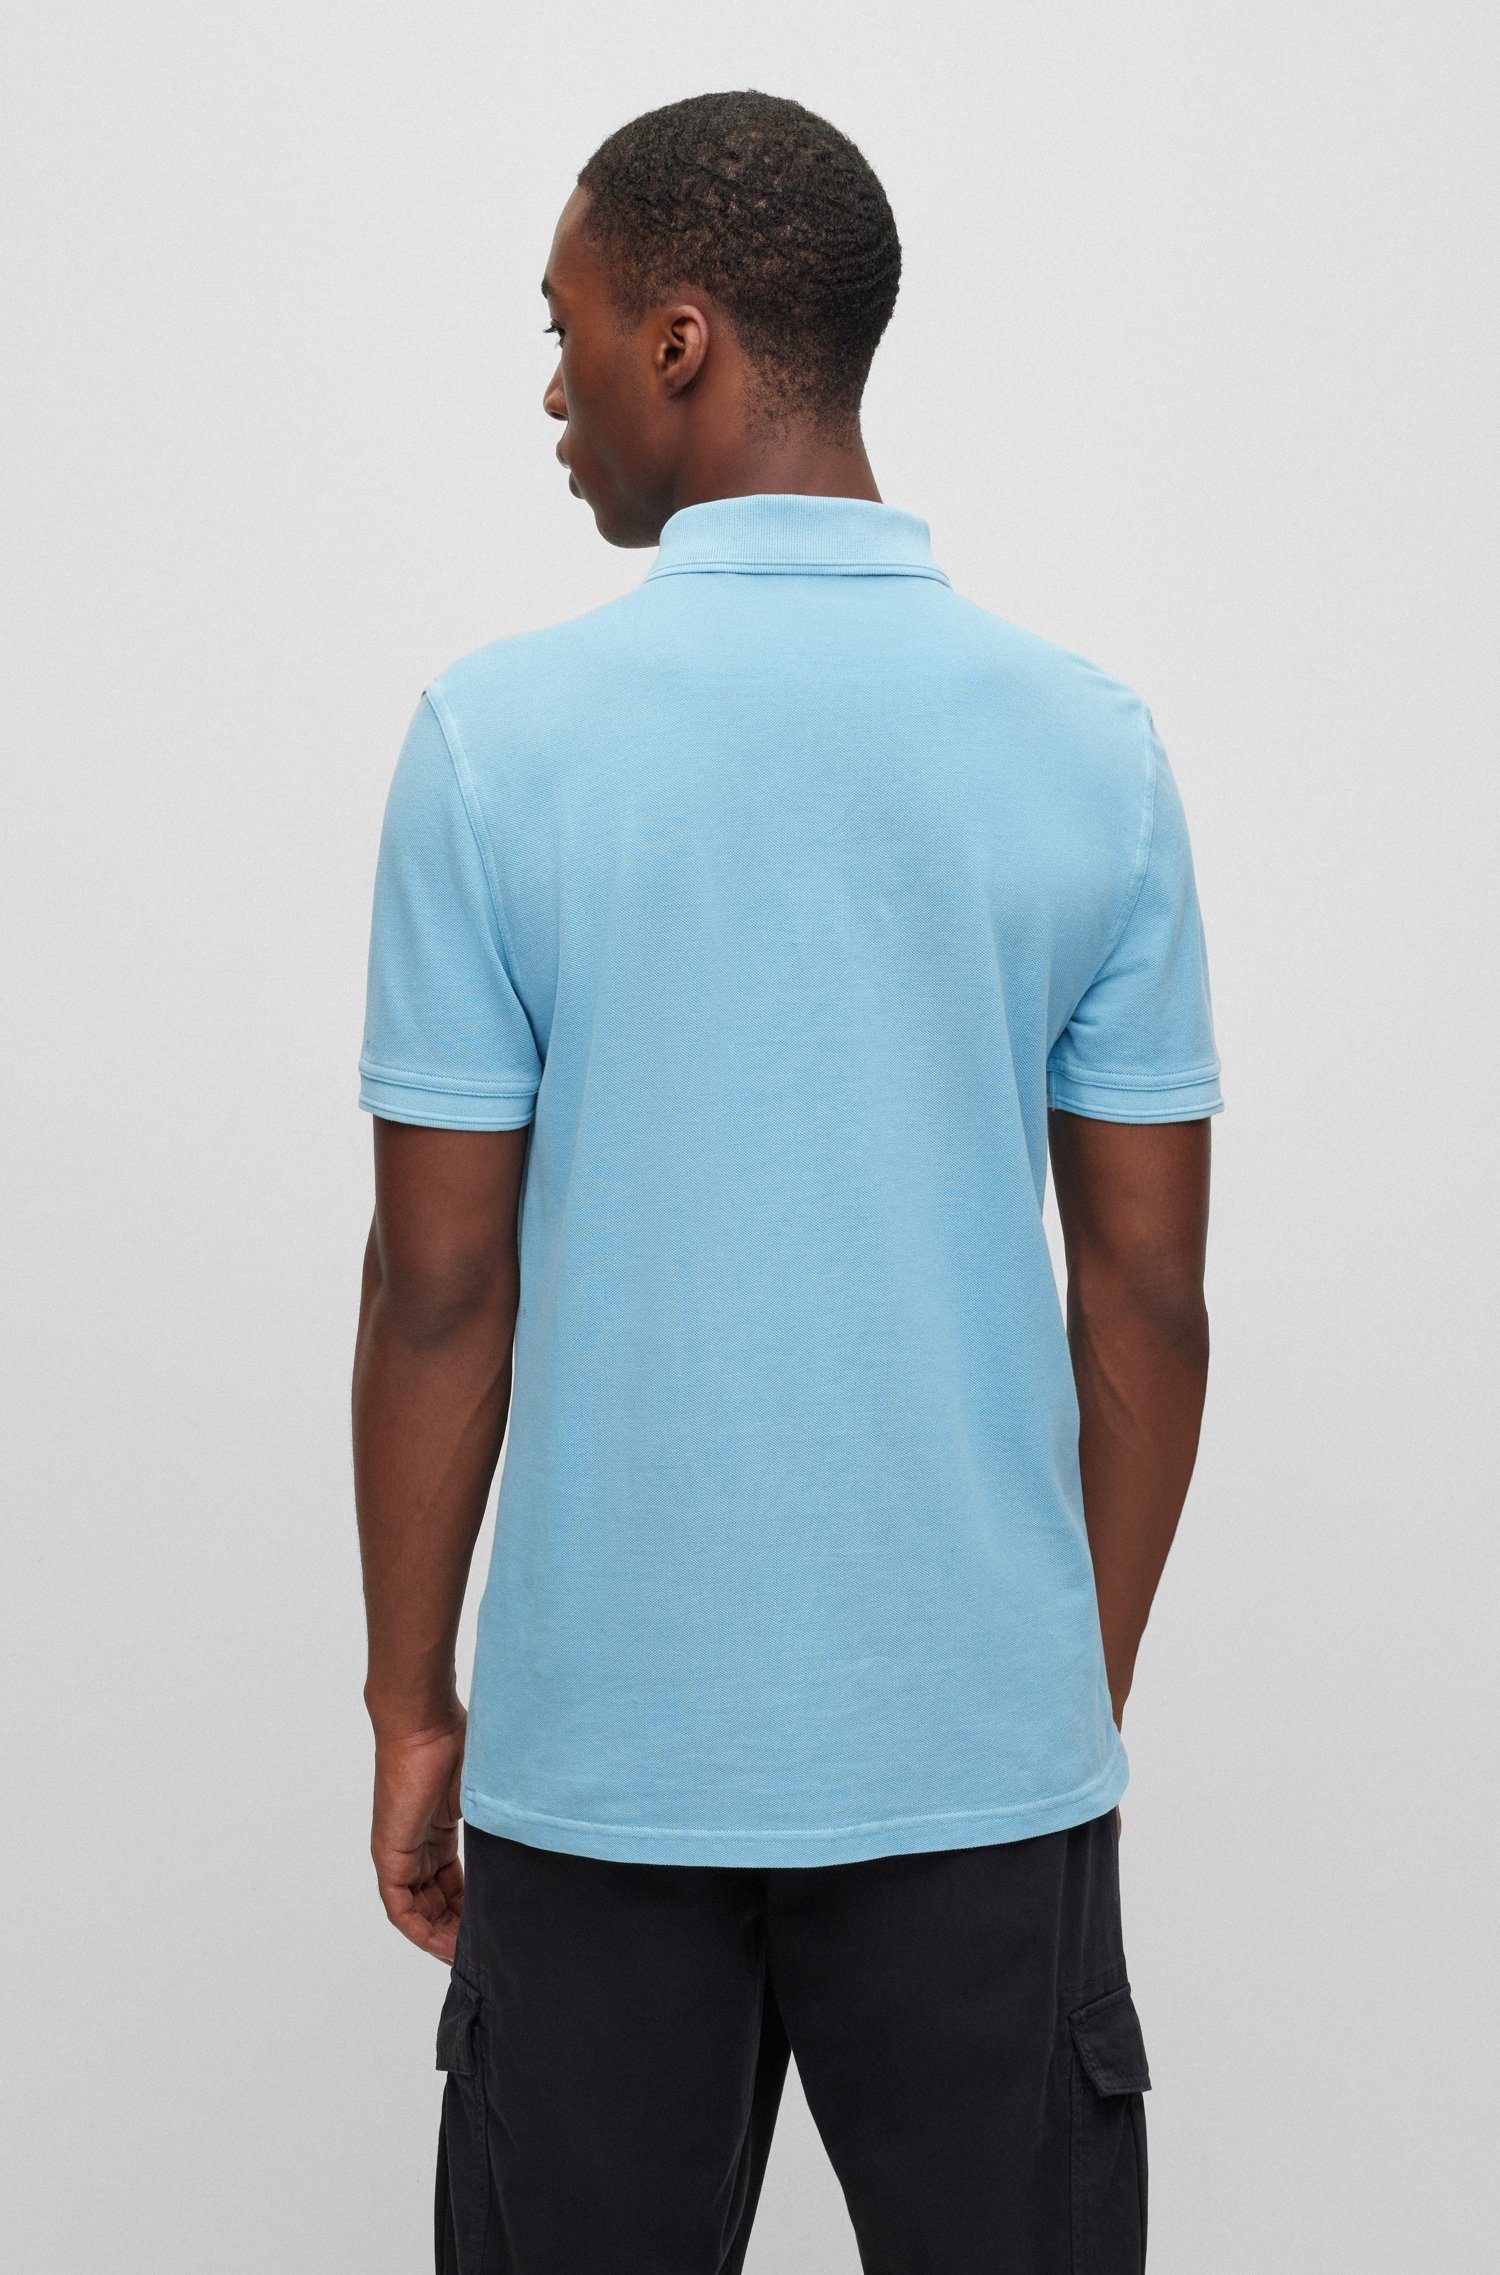 BOSS ORANGE Poloshirt Logoschriftzug 01 dezentem der 10203439 auf Blue2 Brust Open mit Prime